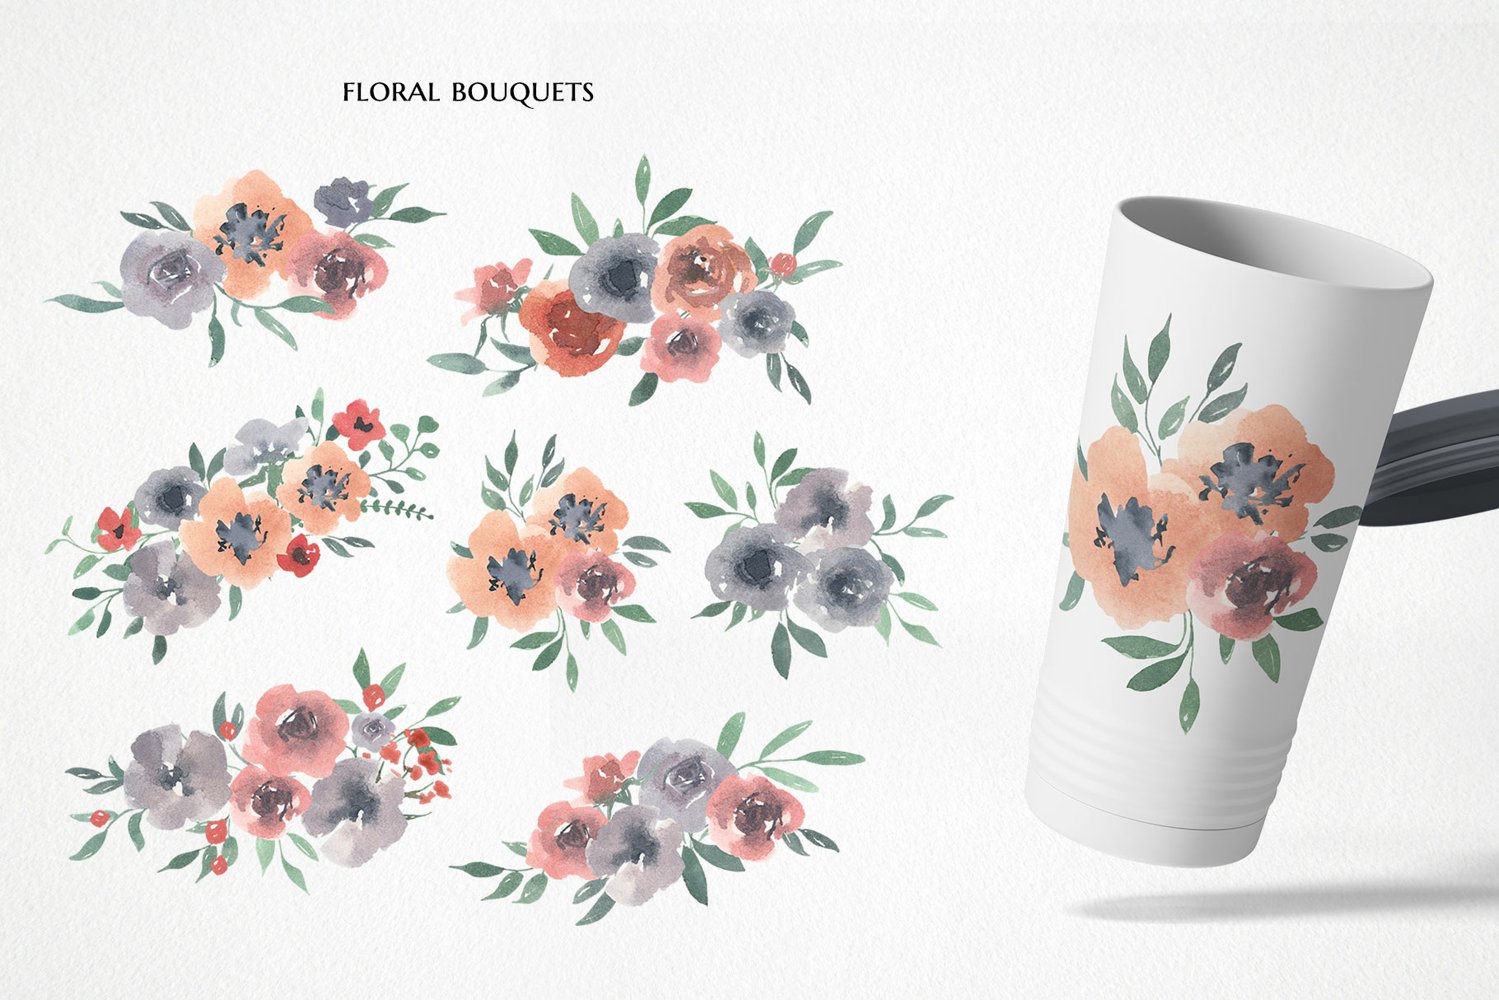 This set includes 7 floral bouquets.